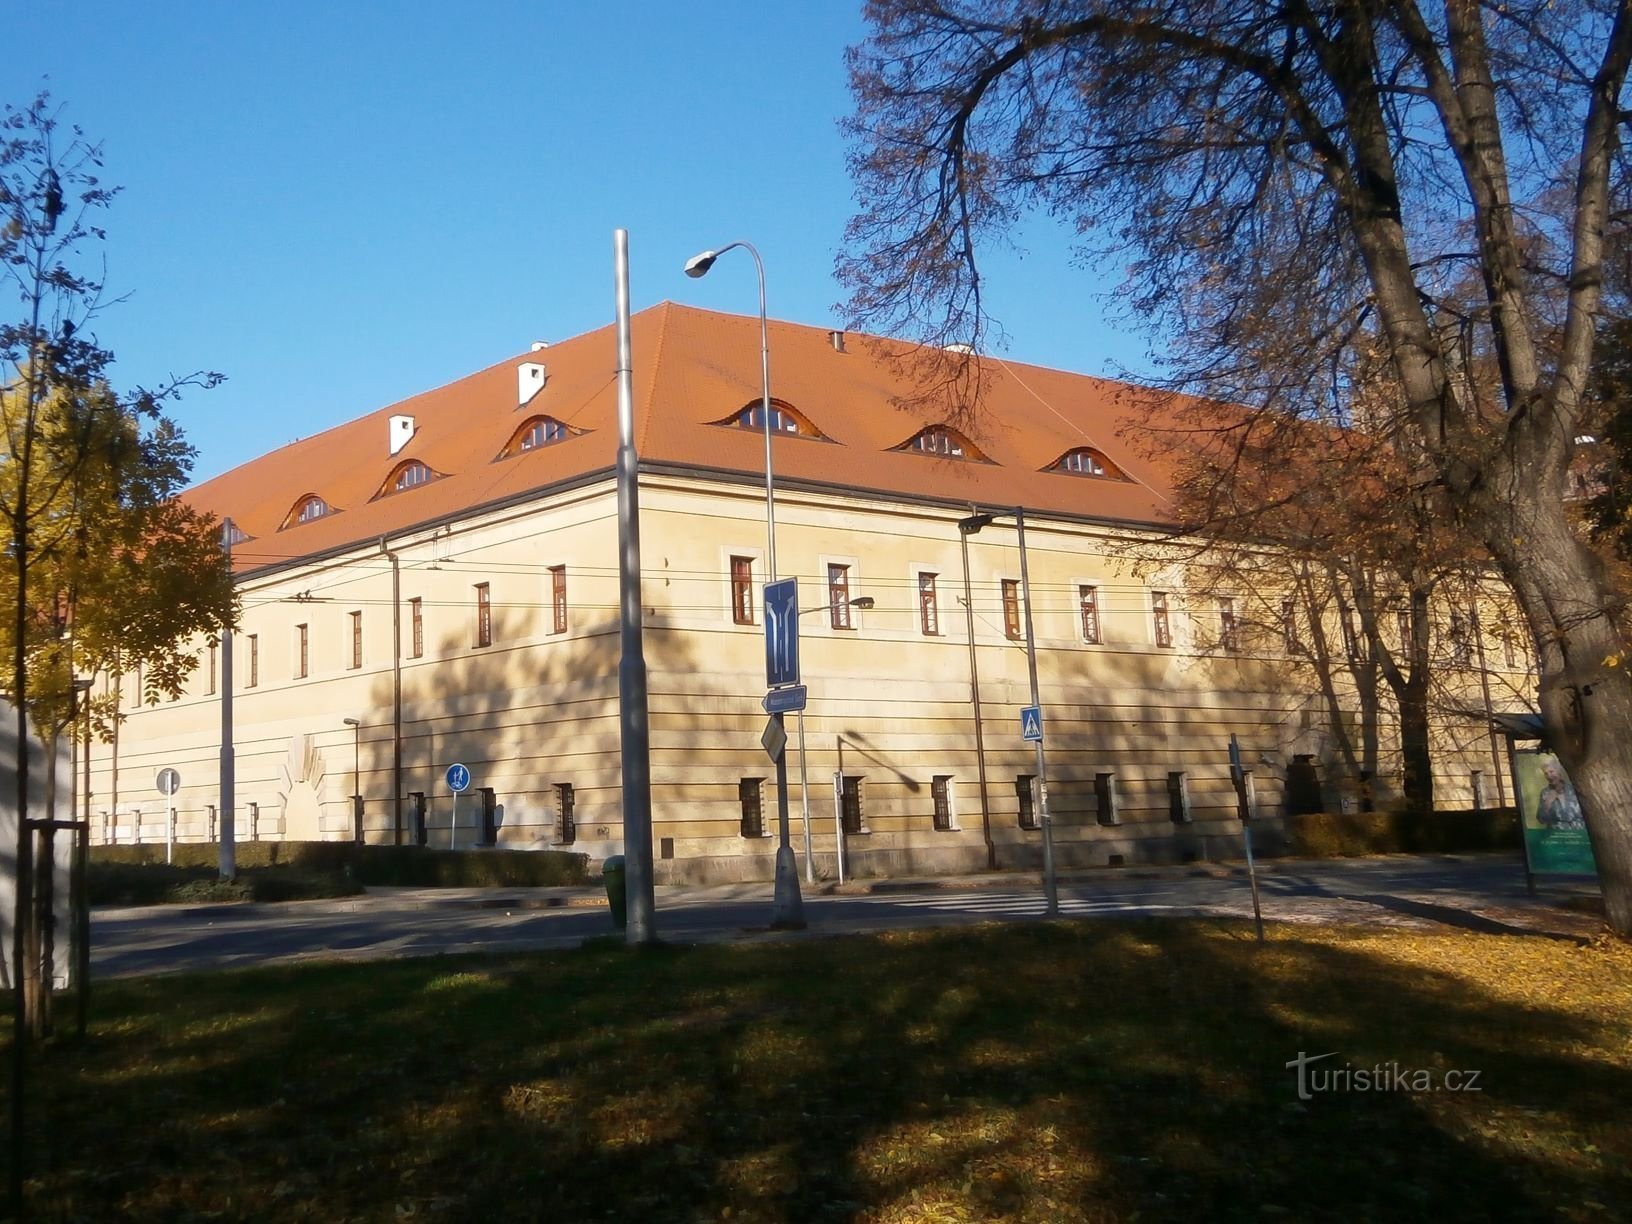 Cuartel de caballería (Hradec Králové, 1.11.2015 de abril de XNUMX)